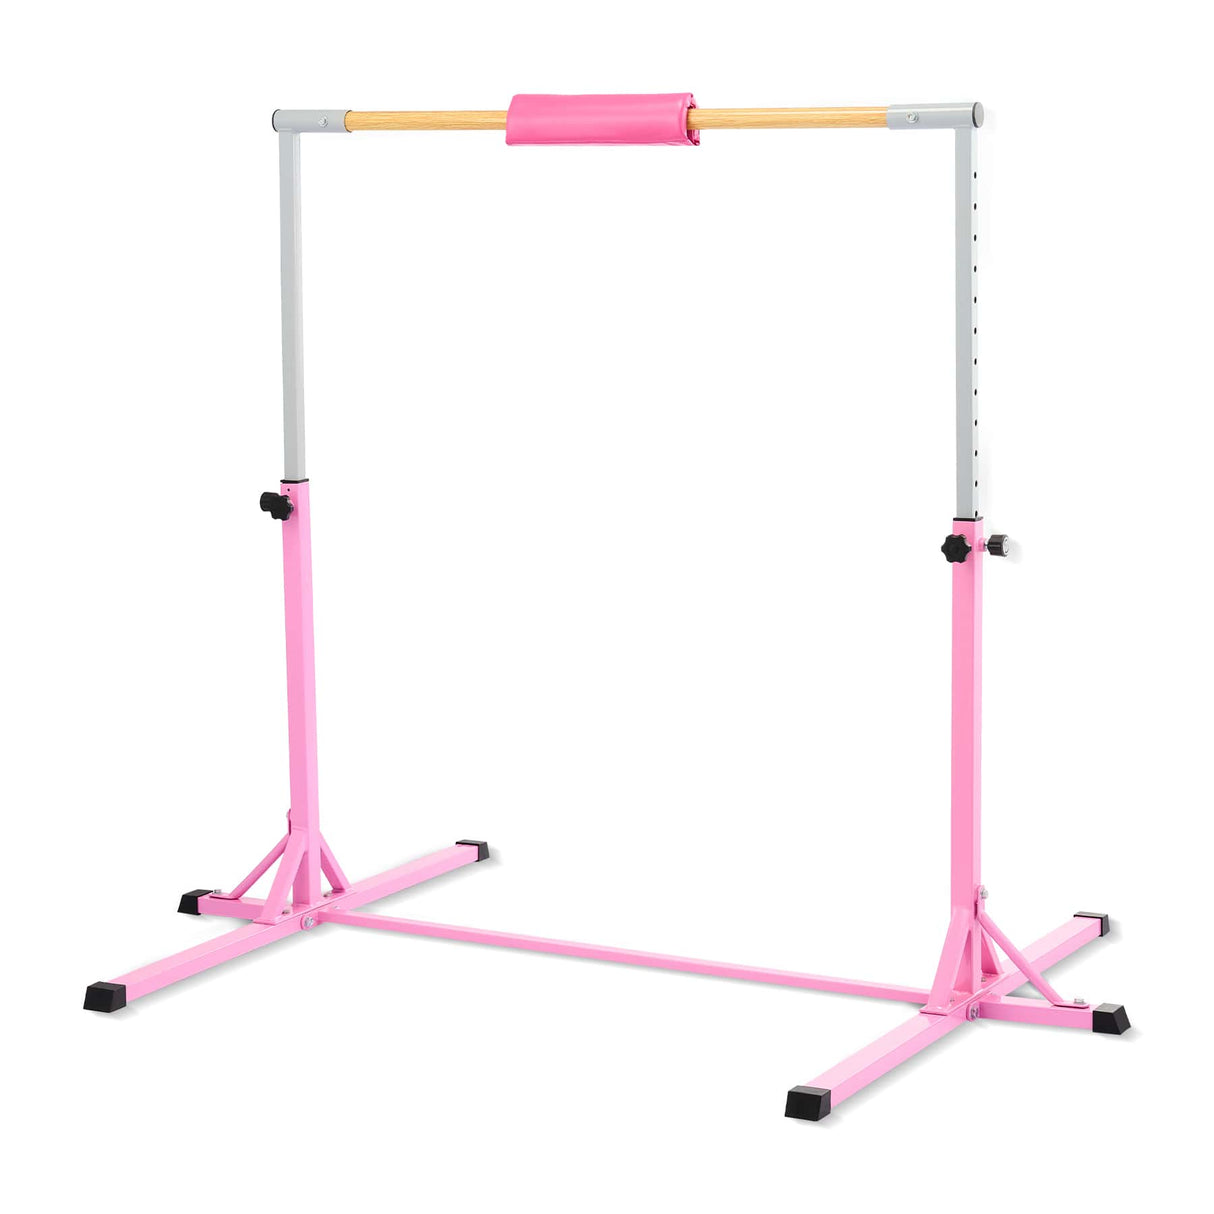 Adjustable Height 4ft Gymnastics Bar Horizontal Kip Bar for Kids-Pink